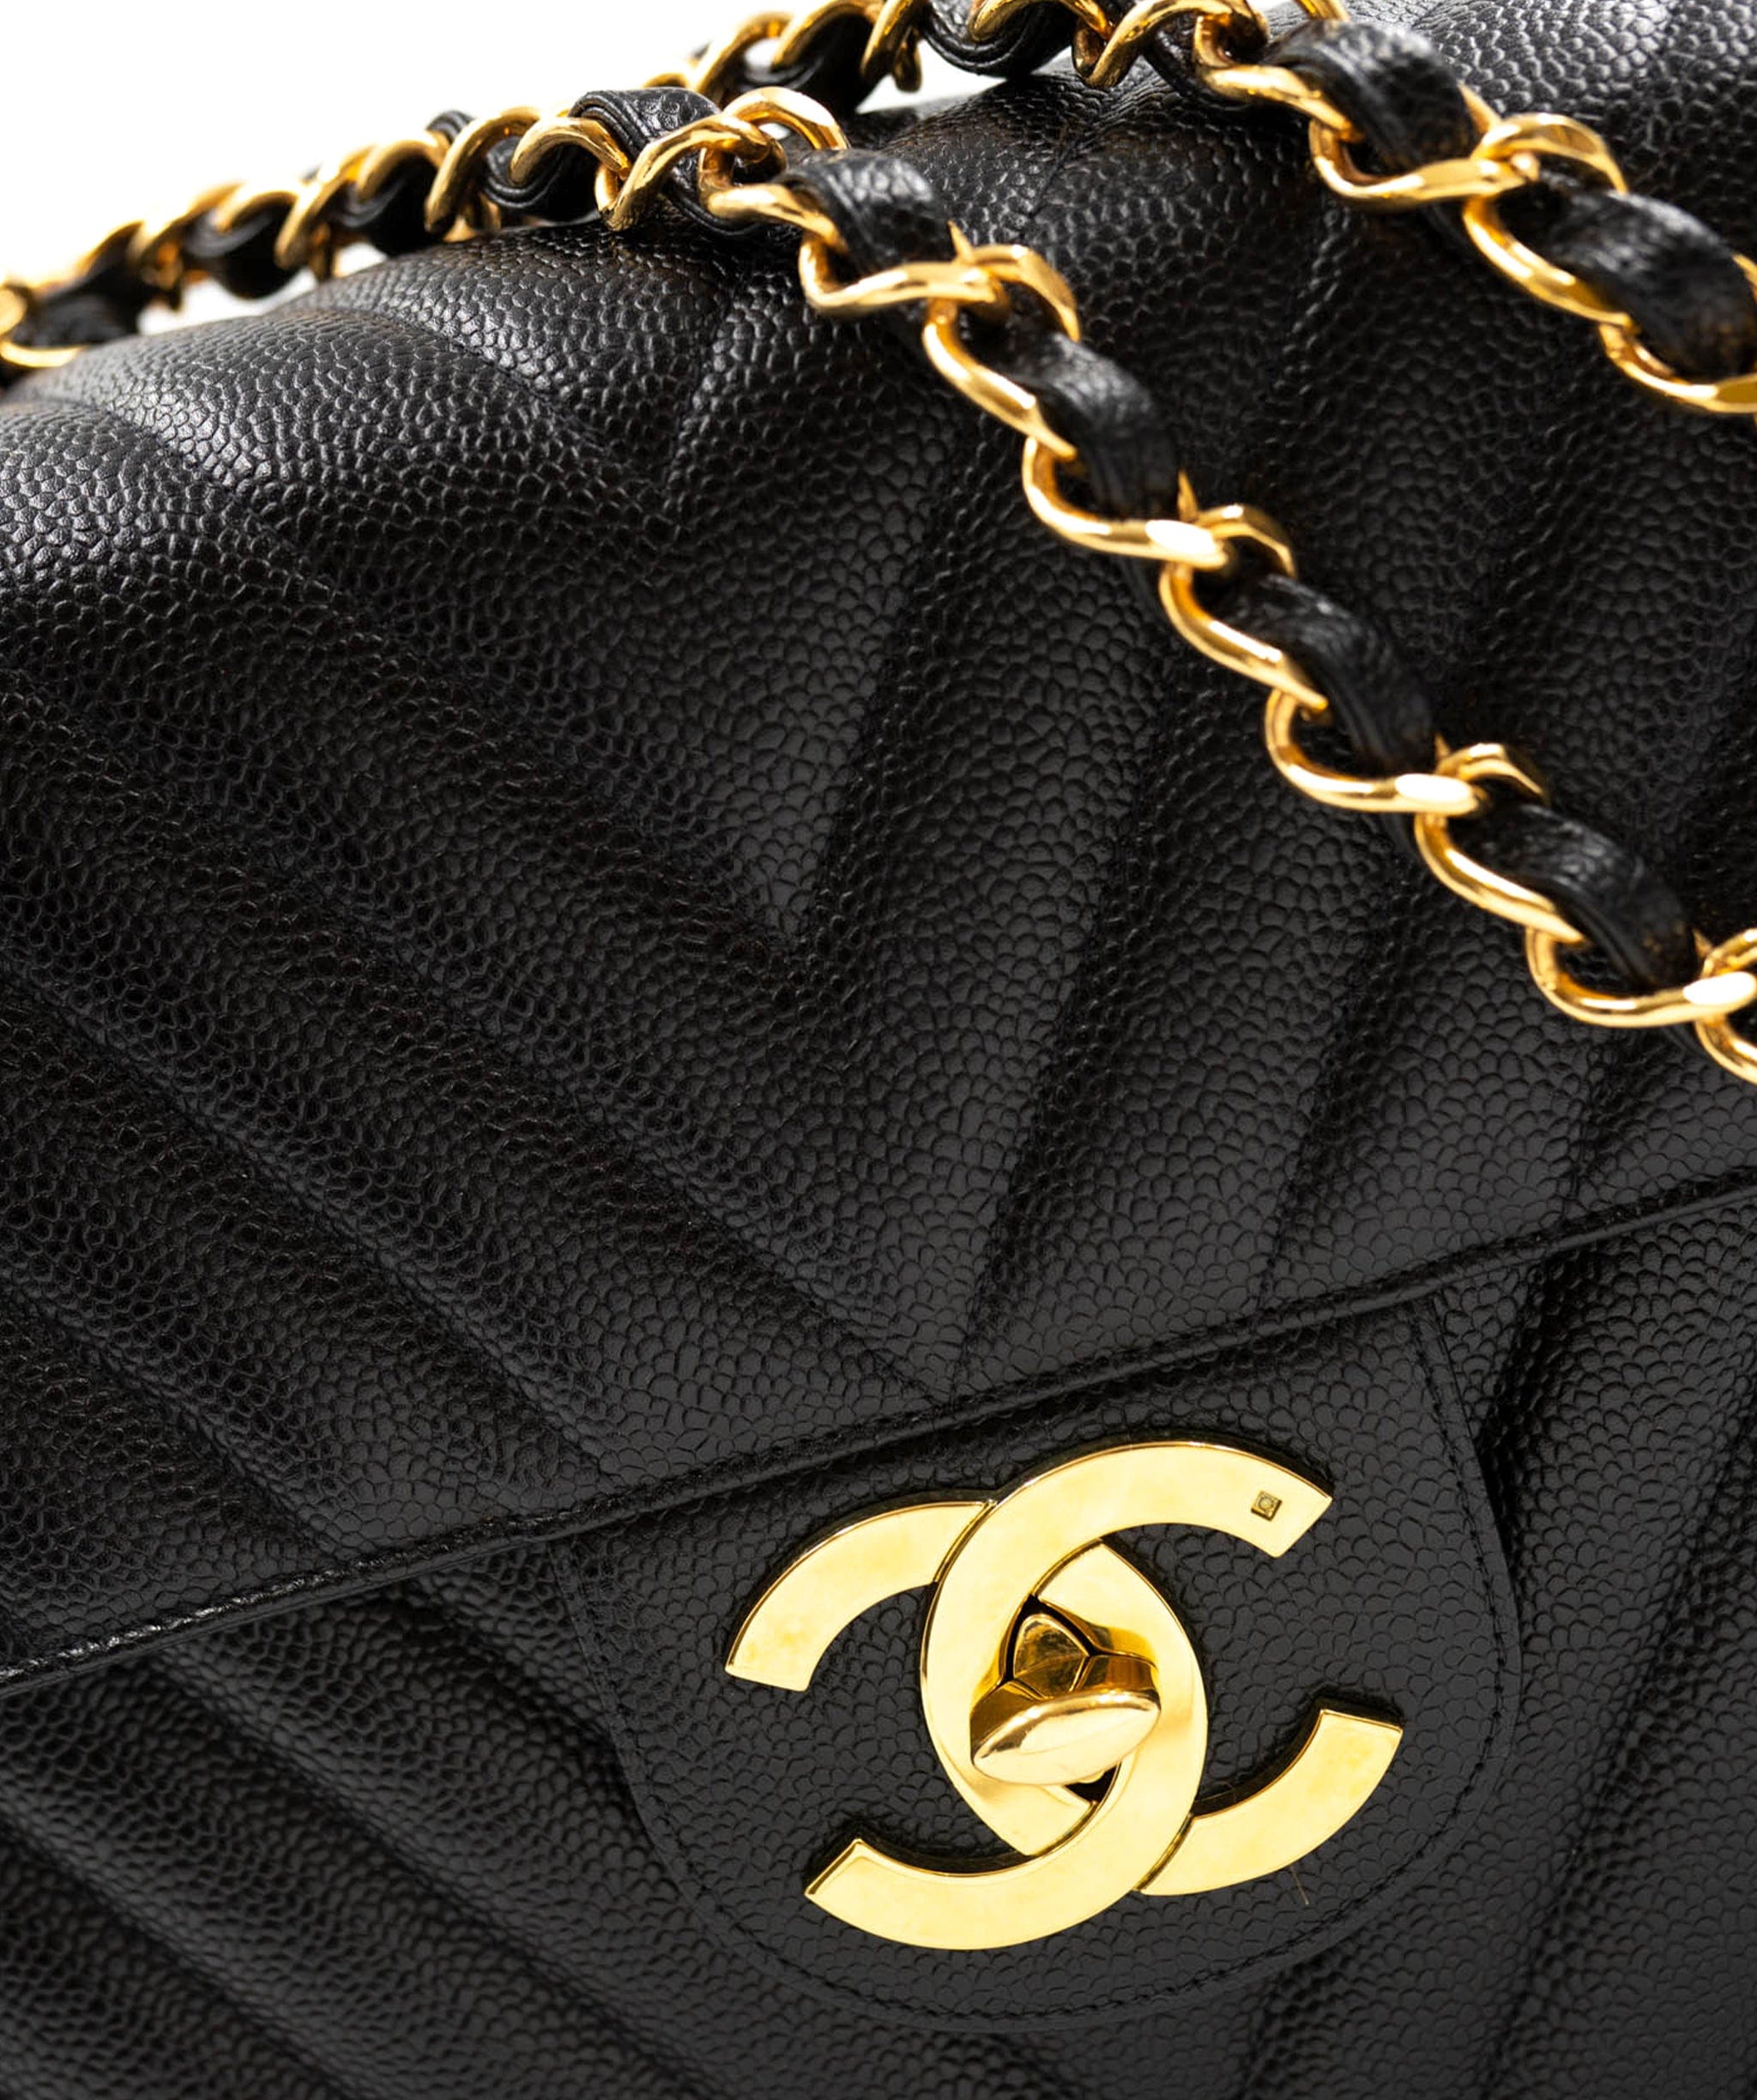 Chanel Chanel Vintage Caviar Maxi Chevron Classic Flap Bag GHW ASL3410